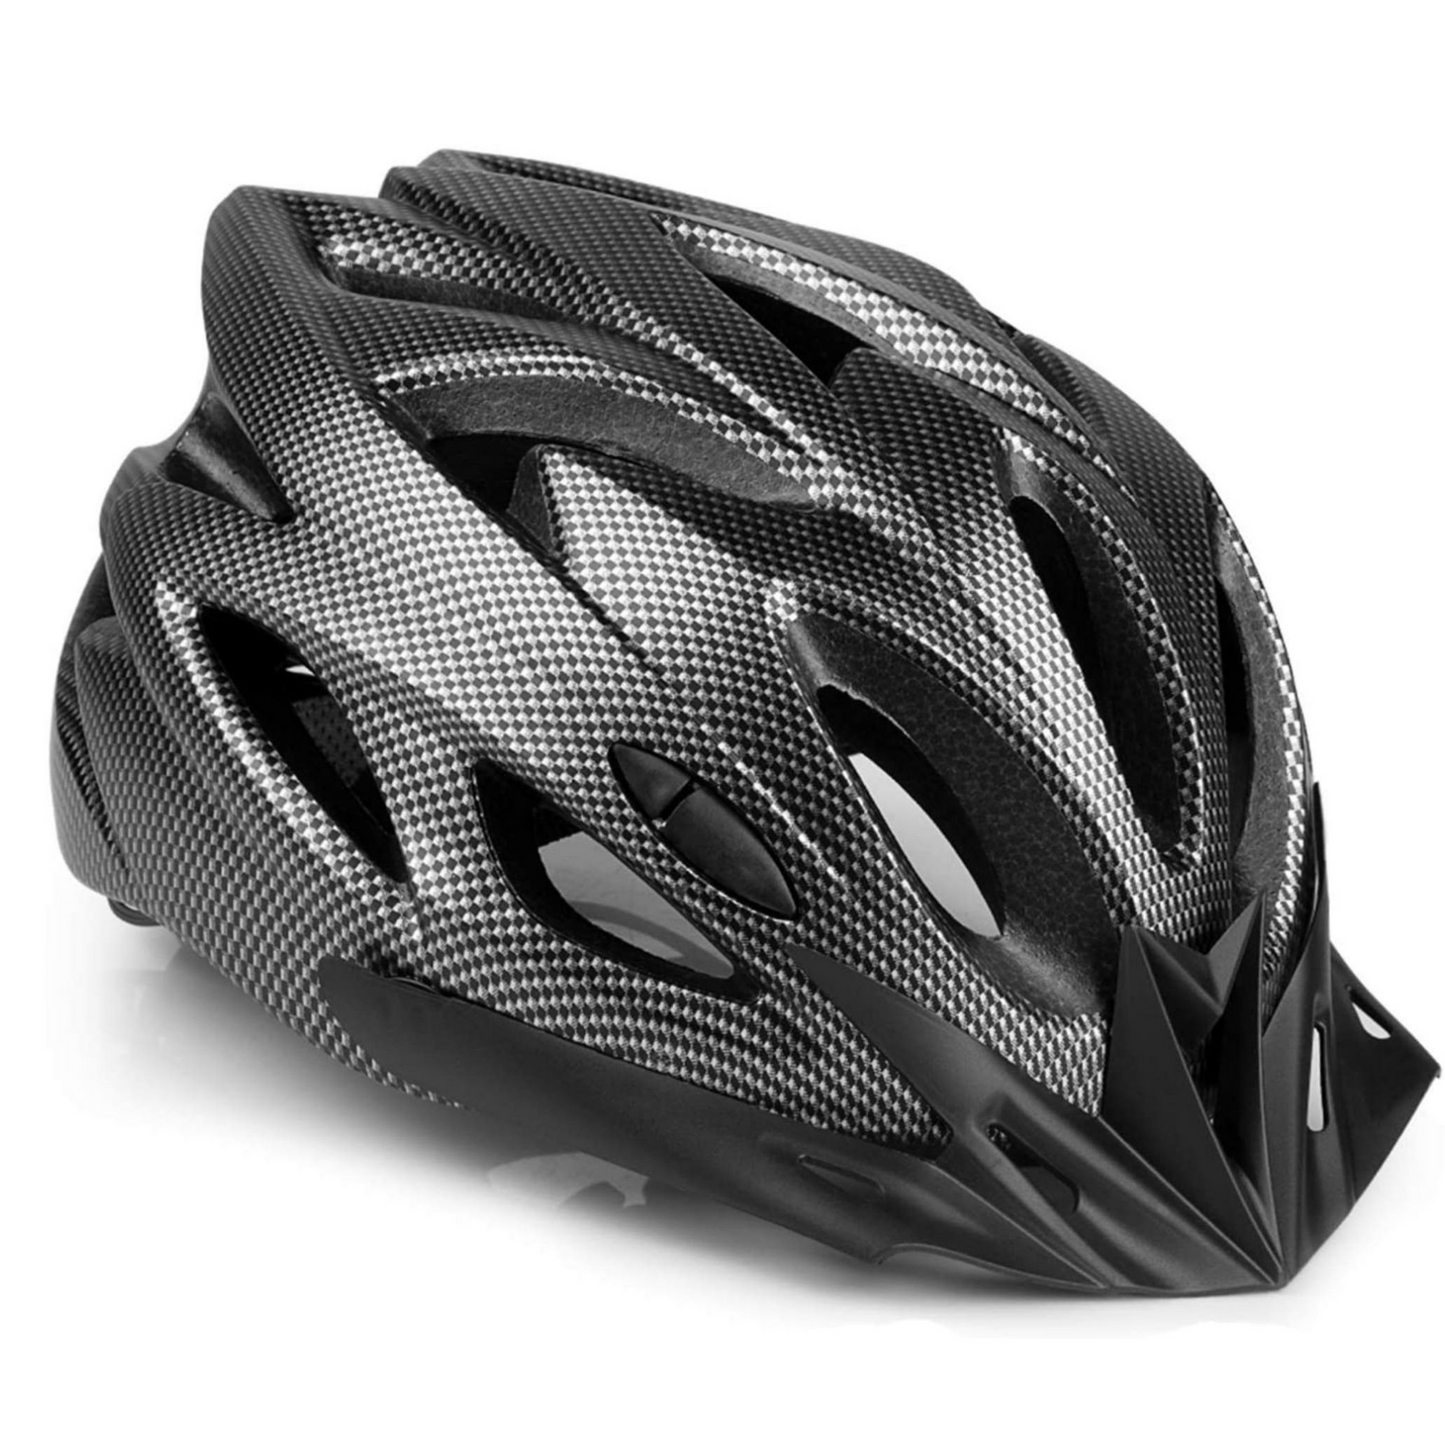 Clyde Cycling Helmet